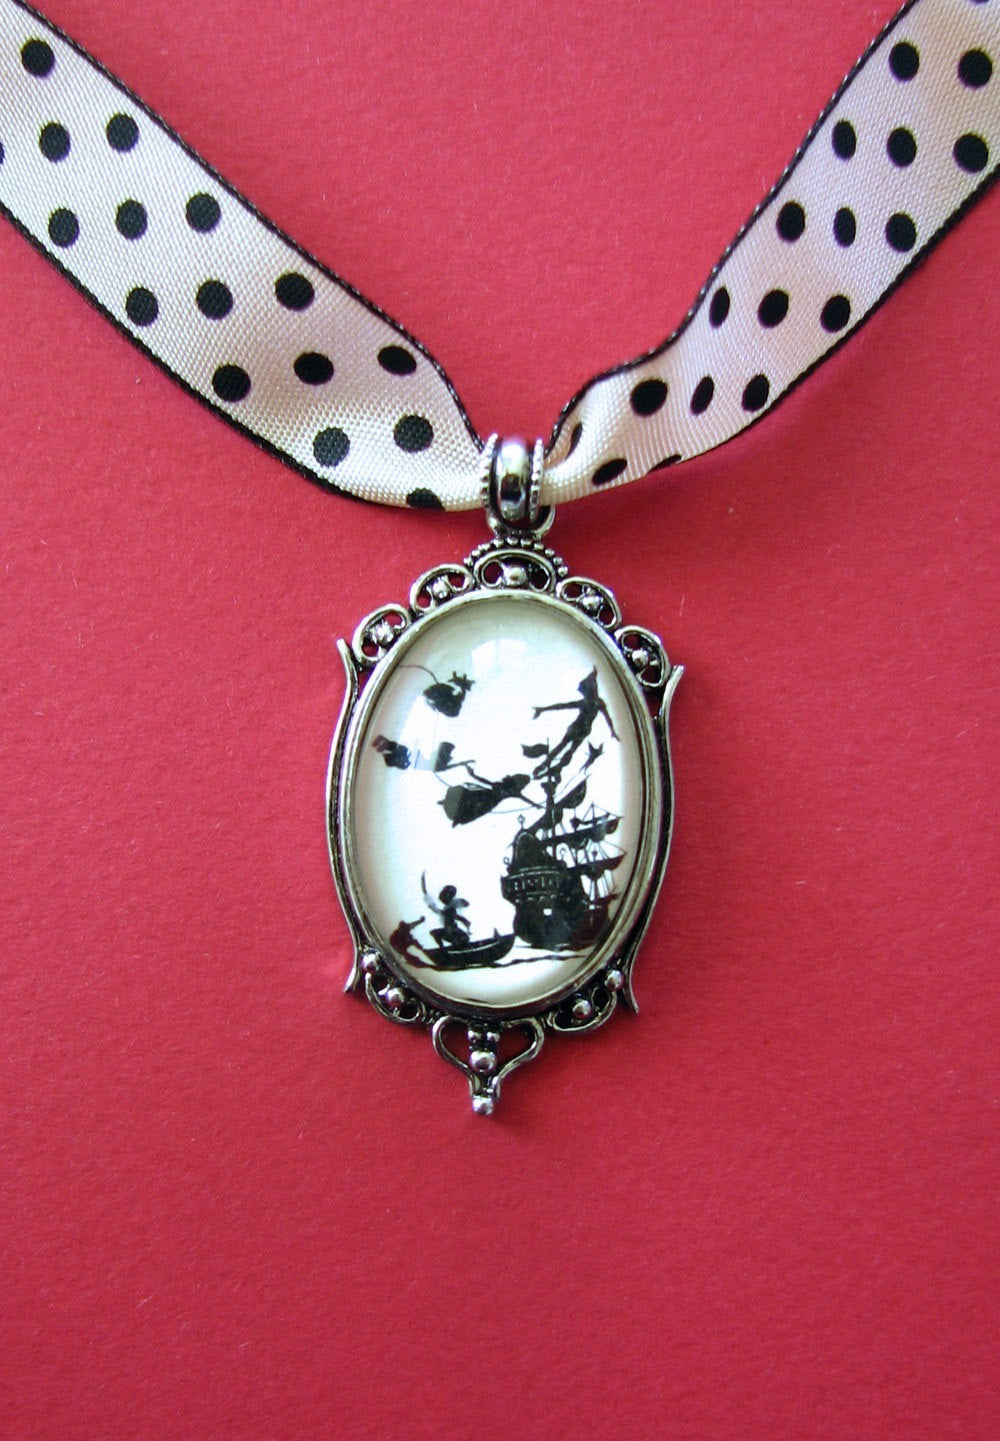 PETER PAN Choker Necklace, pendant on ribbon - Silhouette Jewelry